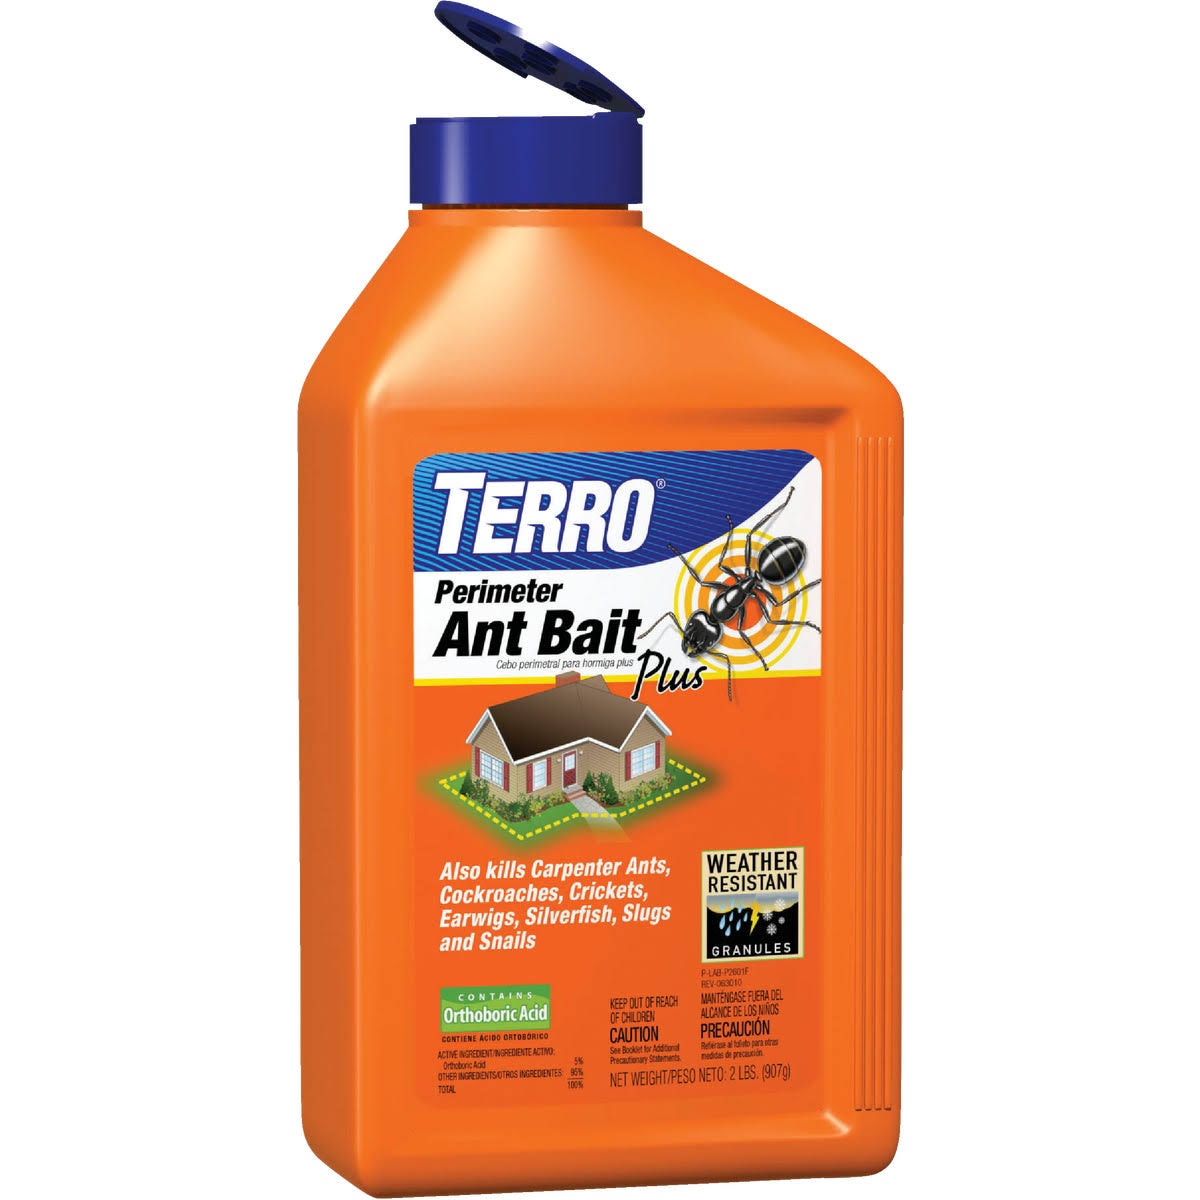 Terro Woodstream Ant Bait Plus - 2lbs